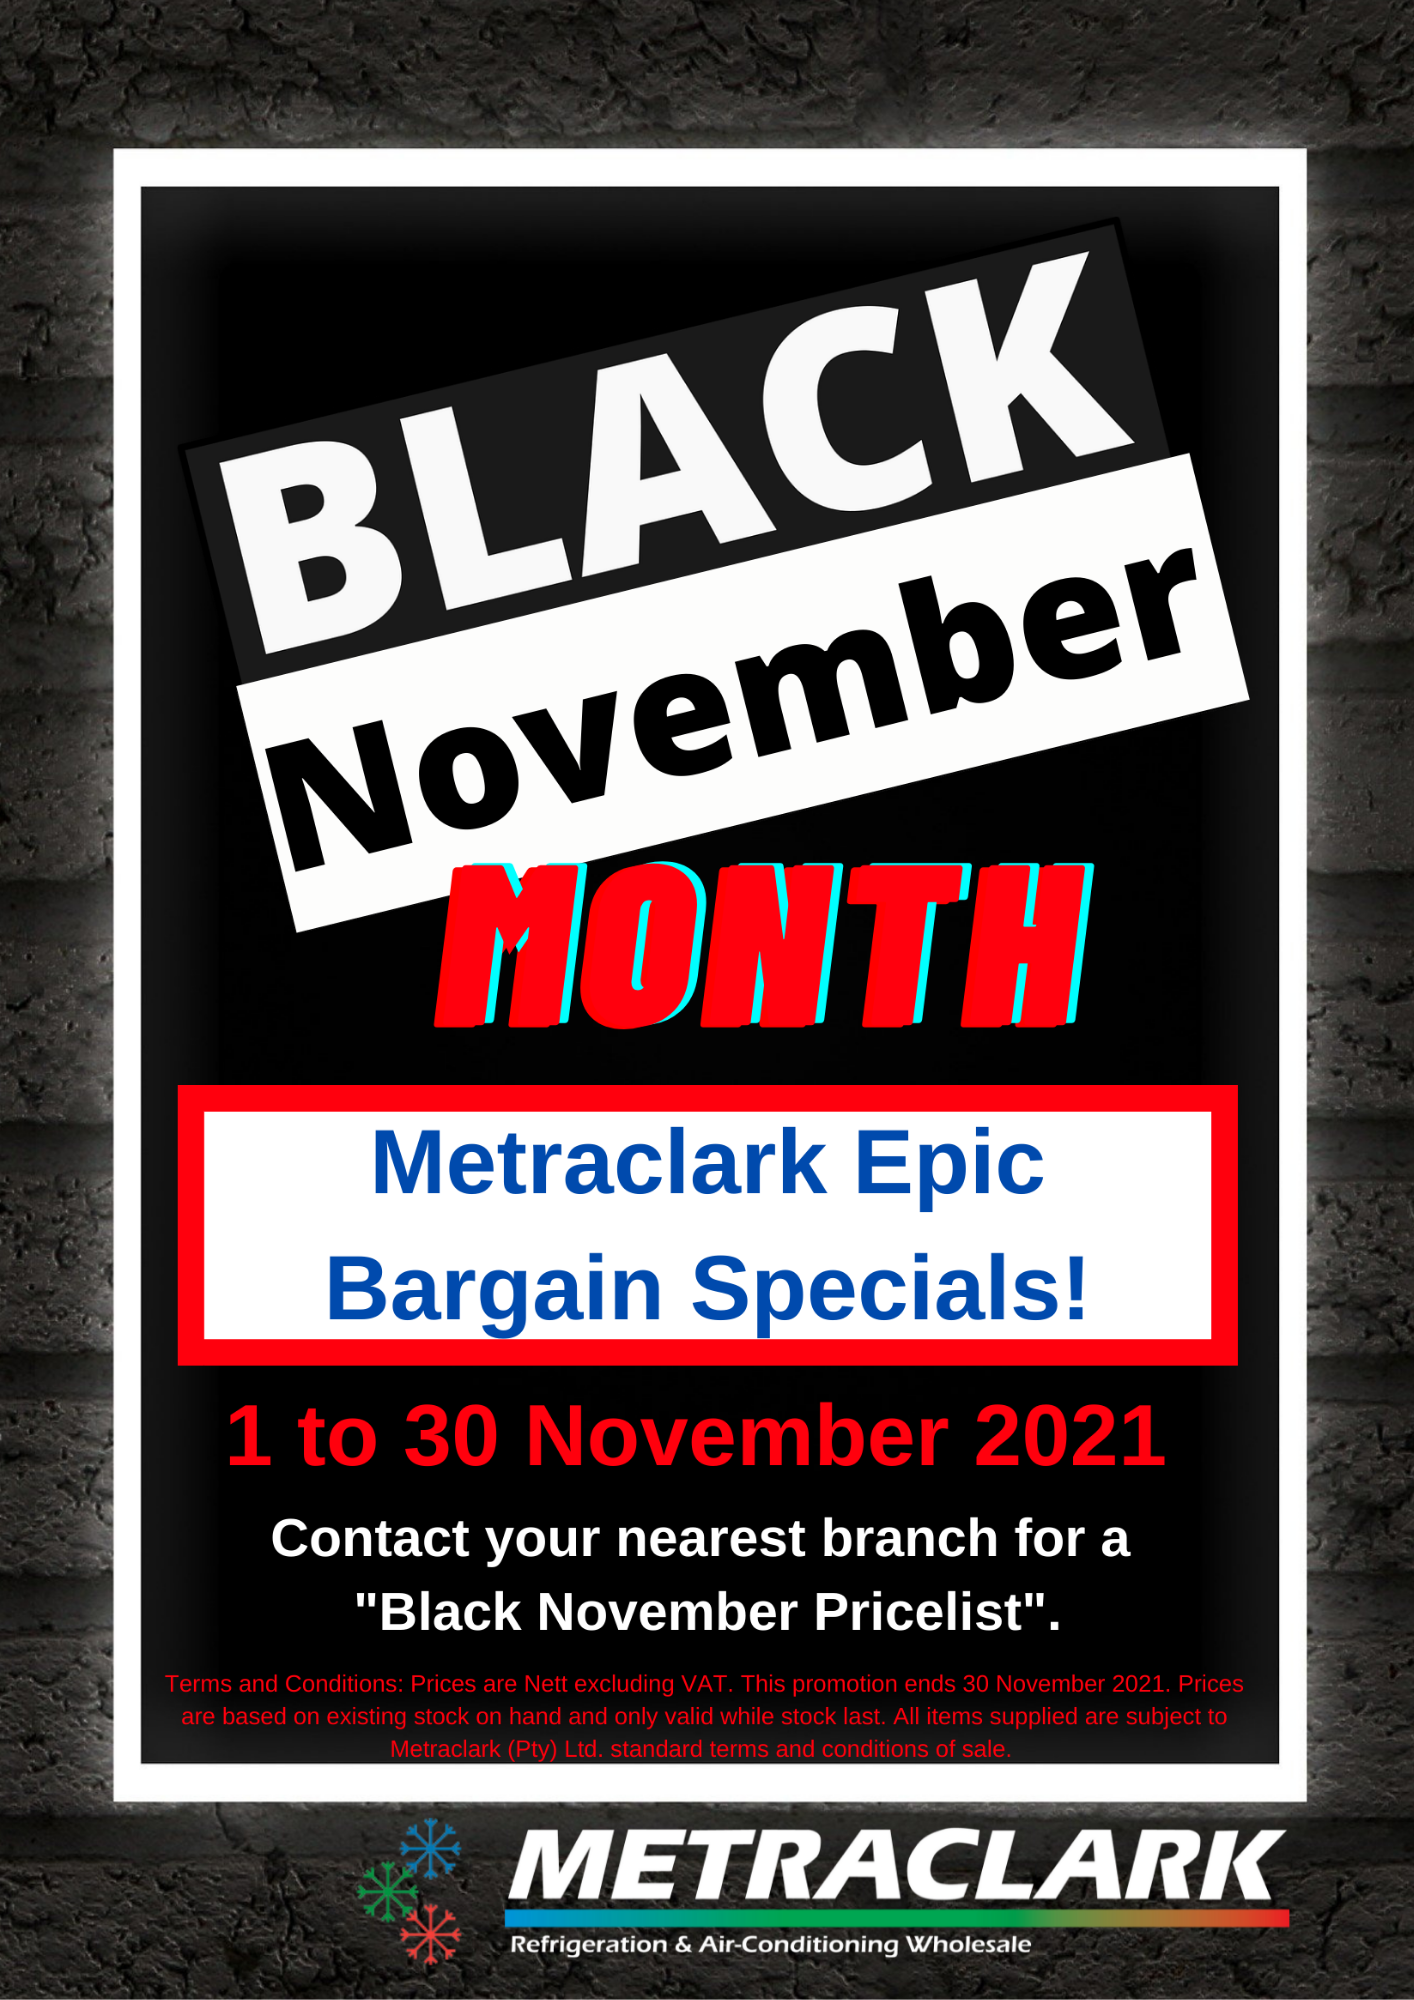 Black November Month - November 2021 Promotion!